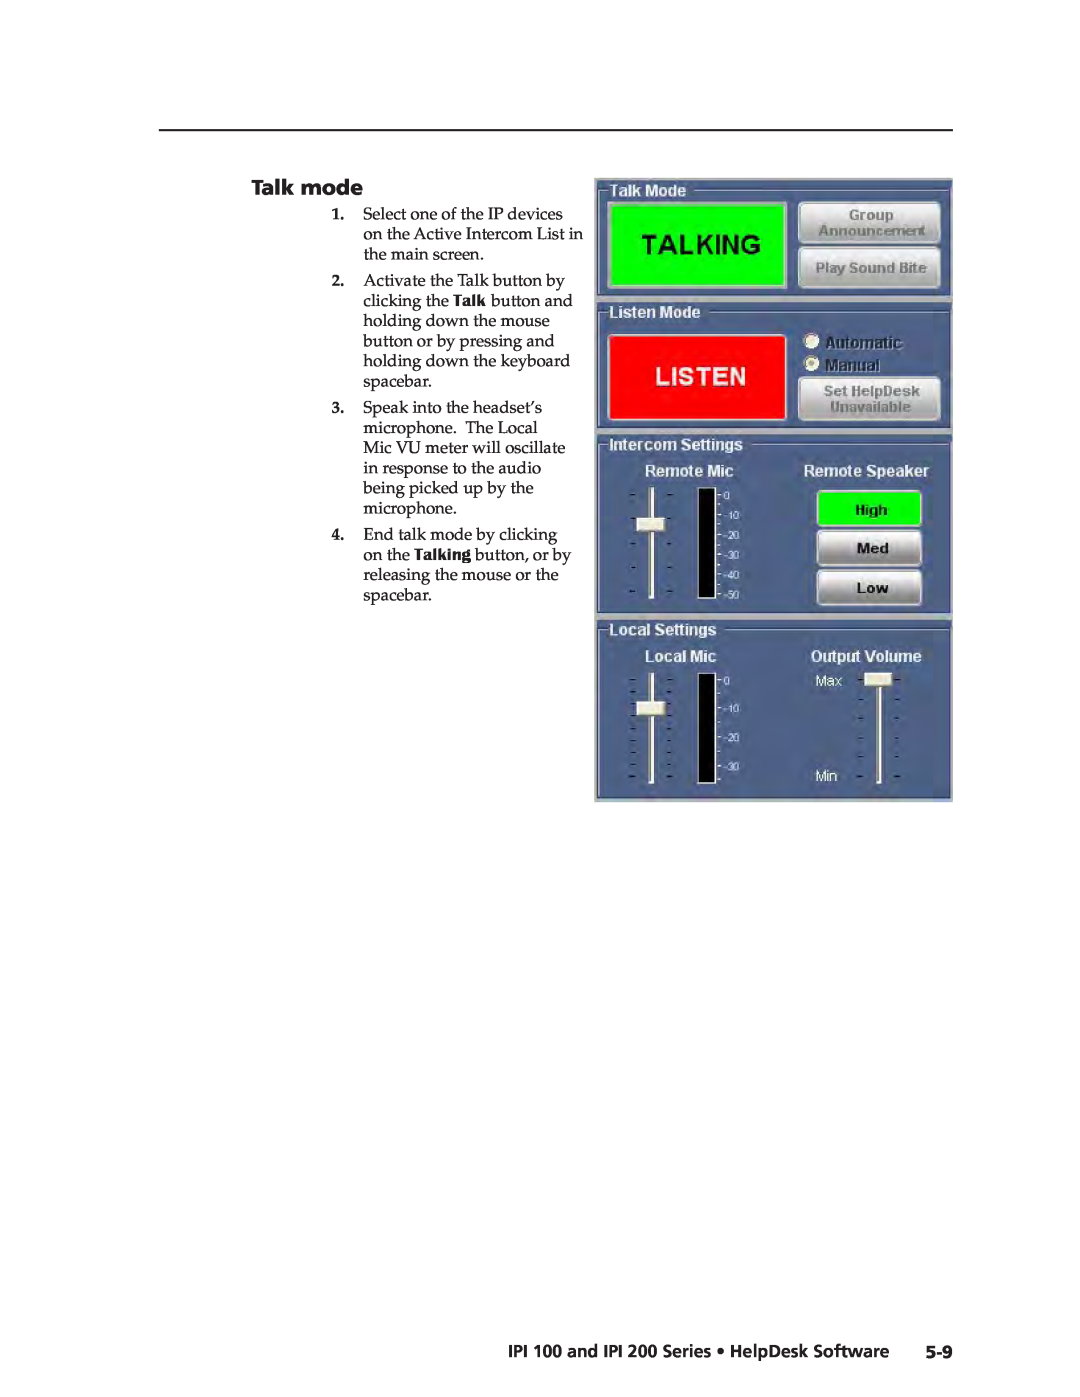 Extron electronic manual Talk mode, IPI 100 and IPI 200 Series HelpDesk Software 